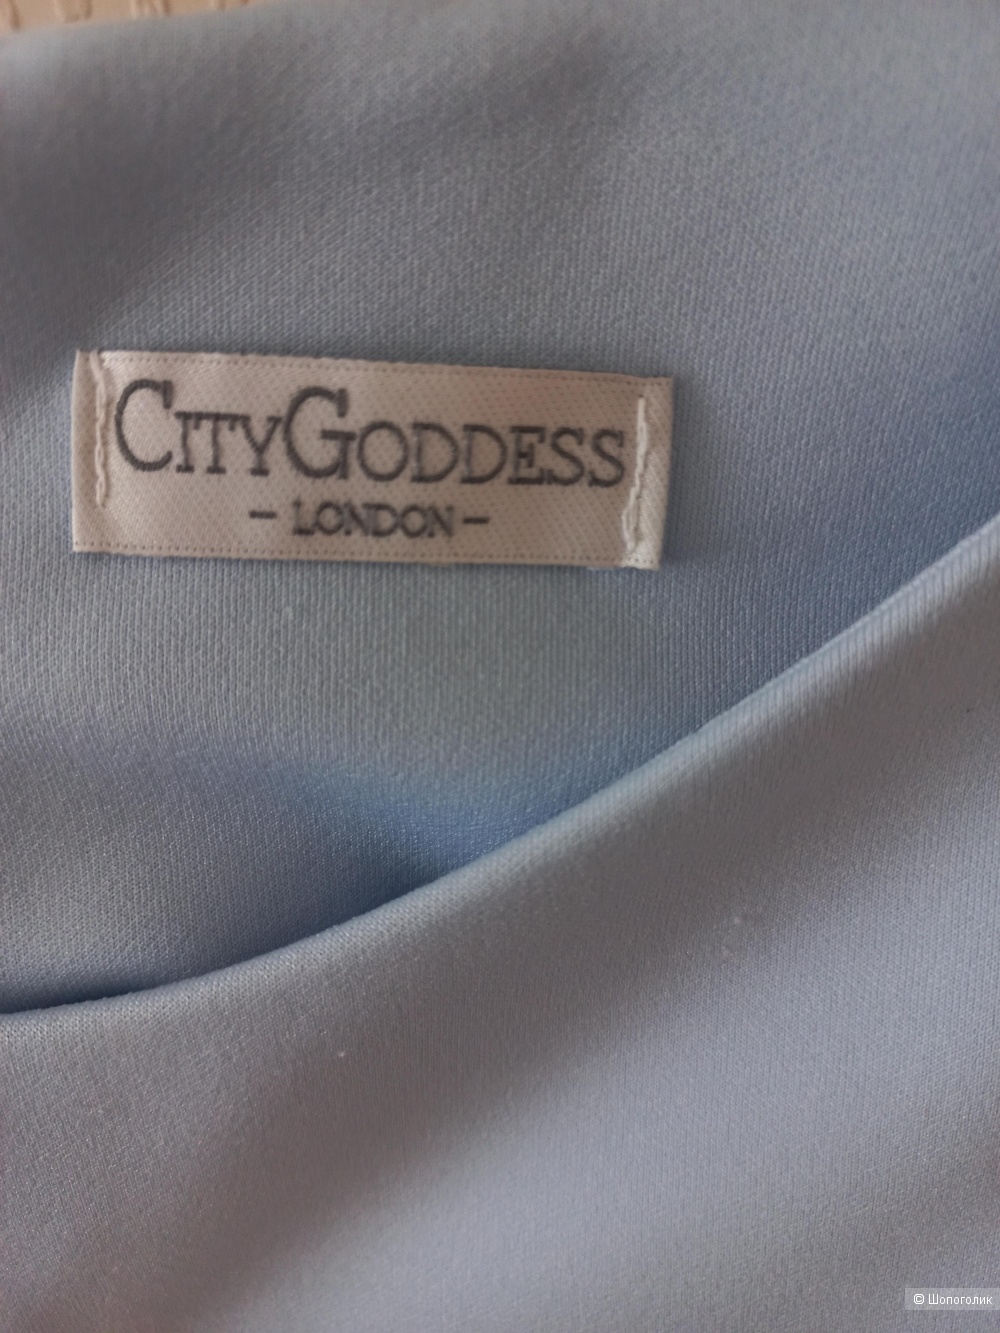 Платье CityGoddess London размер 44